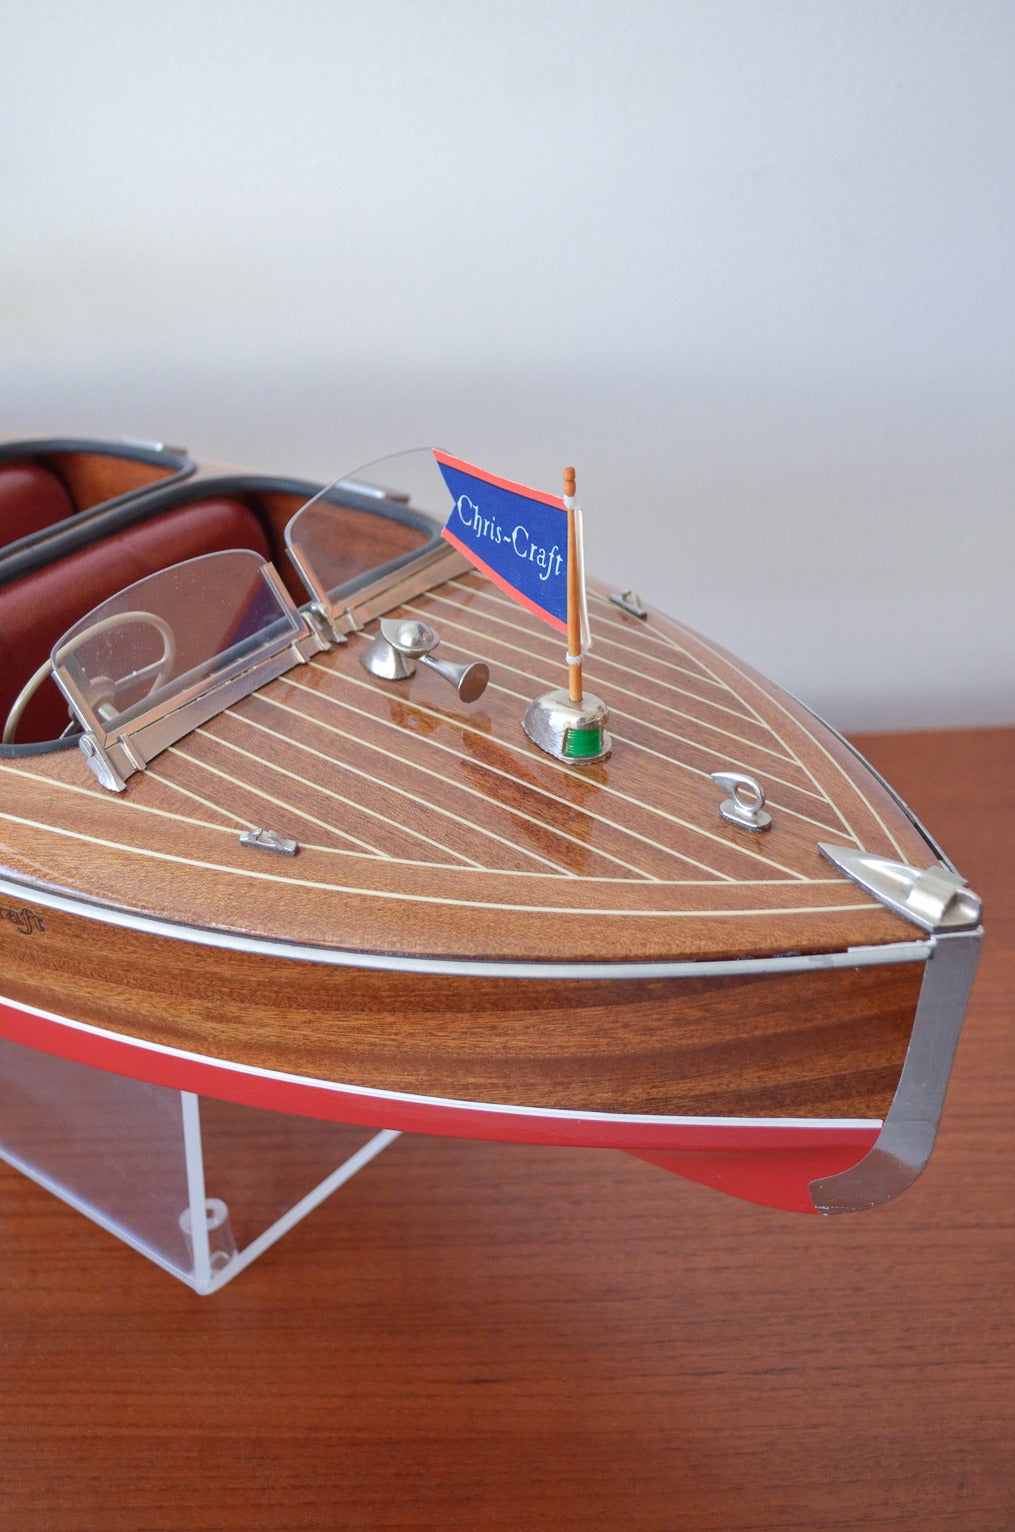 chris-craft boat models